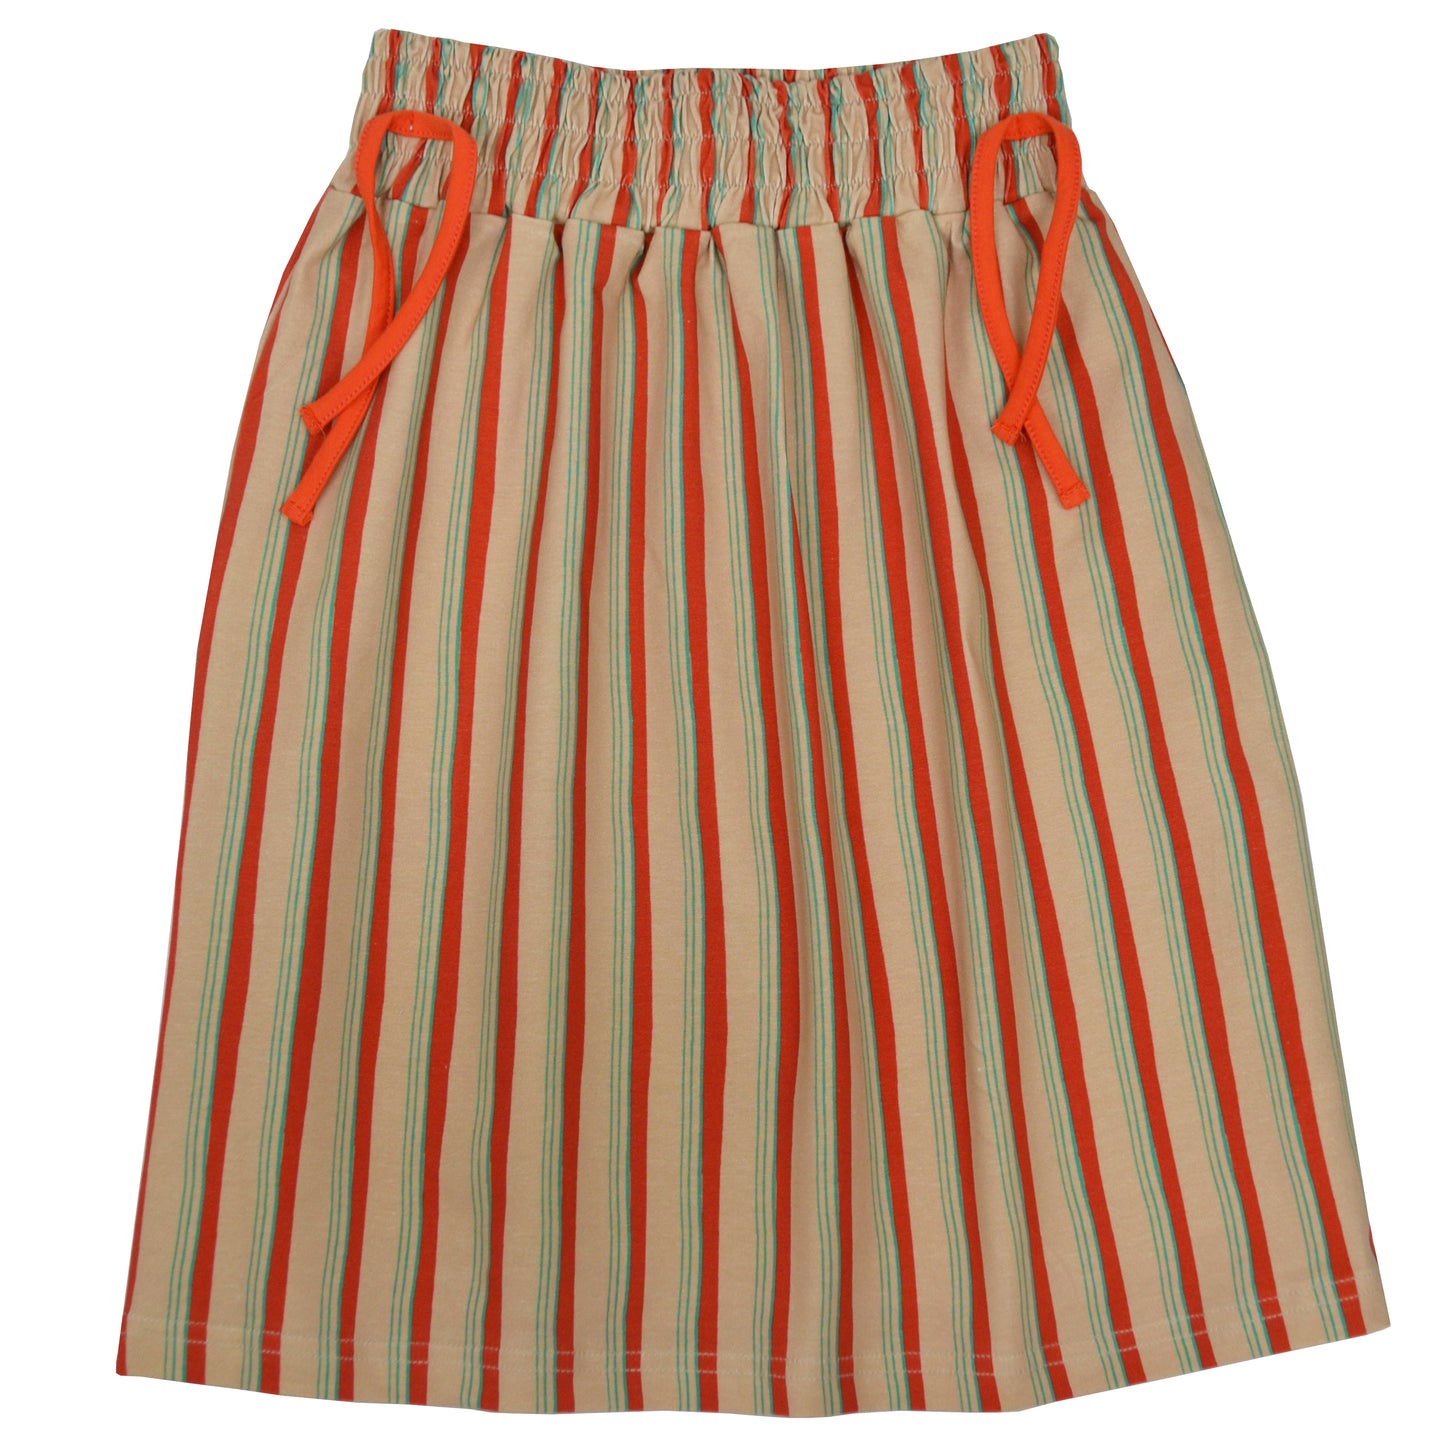 Chaga skirt Red stripe